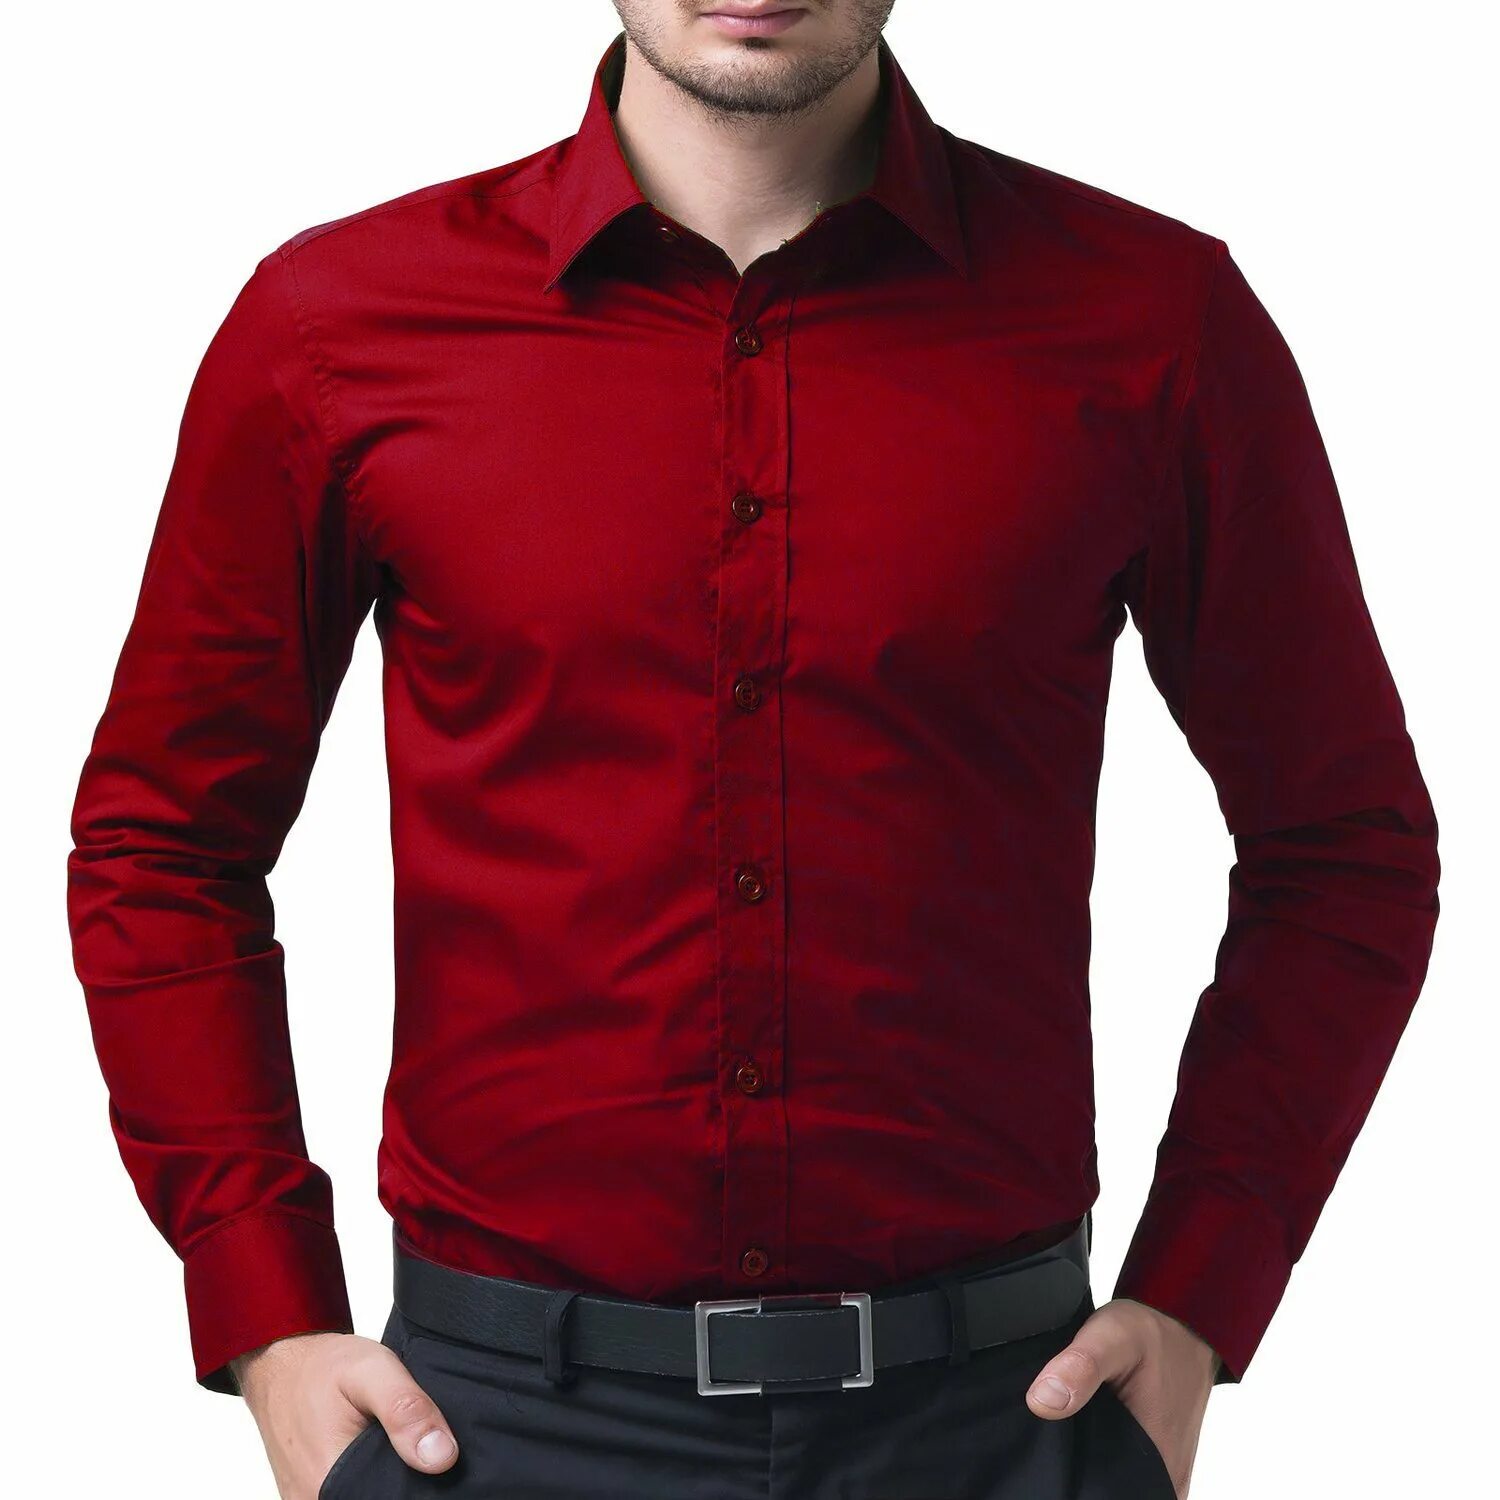 Красная одежда мужская. Рубашка Red. Багровая мужская рубашка. Мужчина в малиновой рубашке. Красная рубашка текст